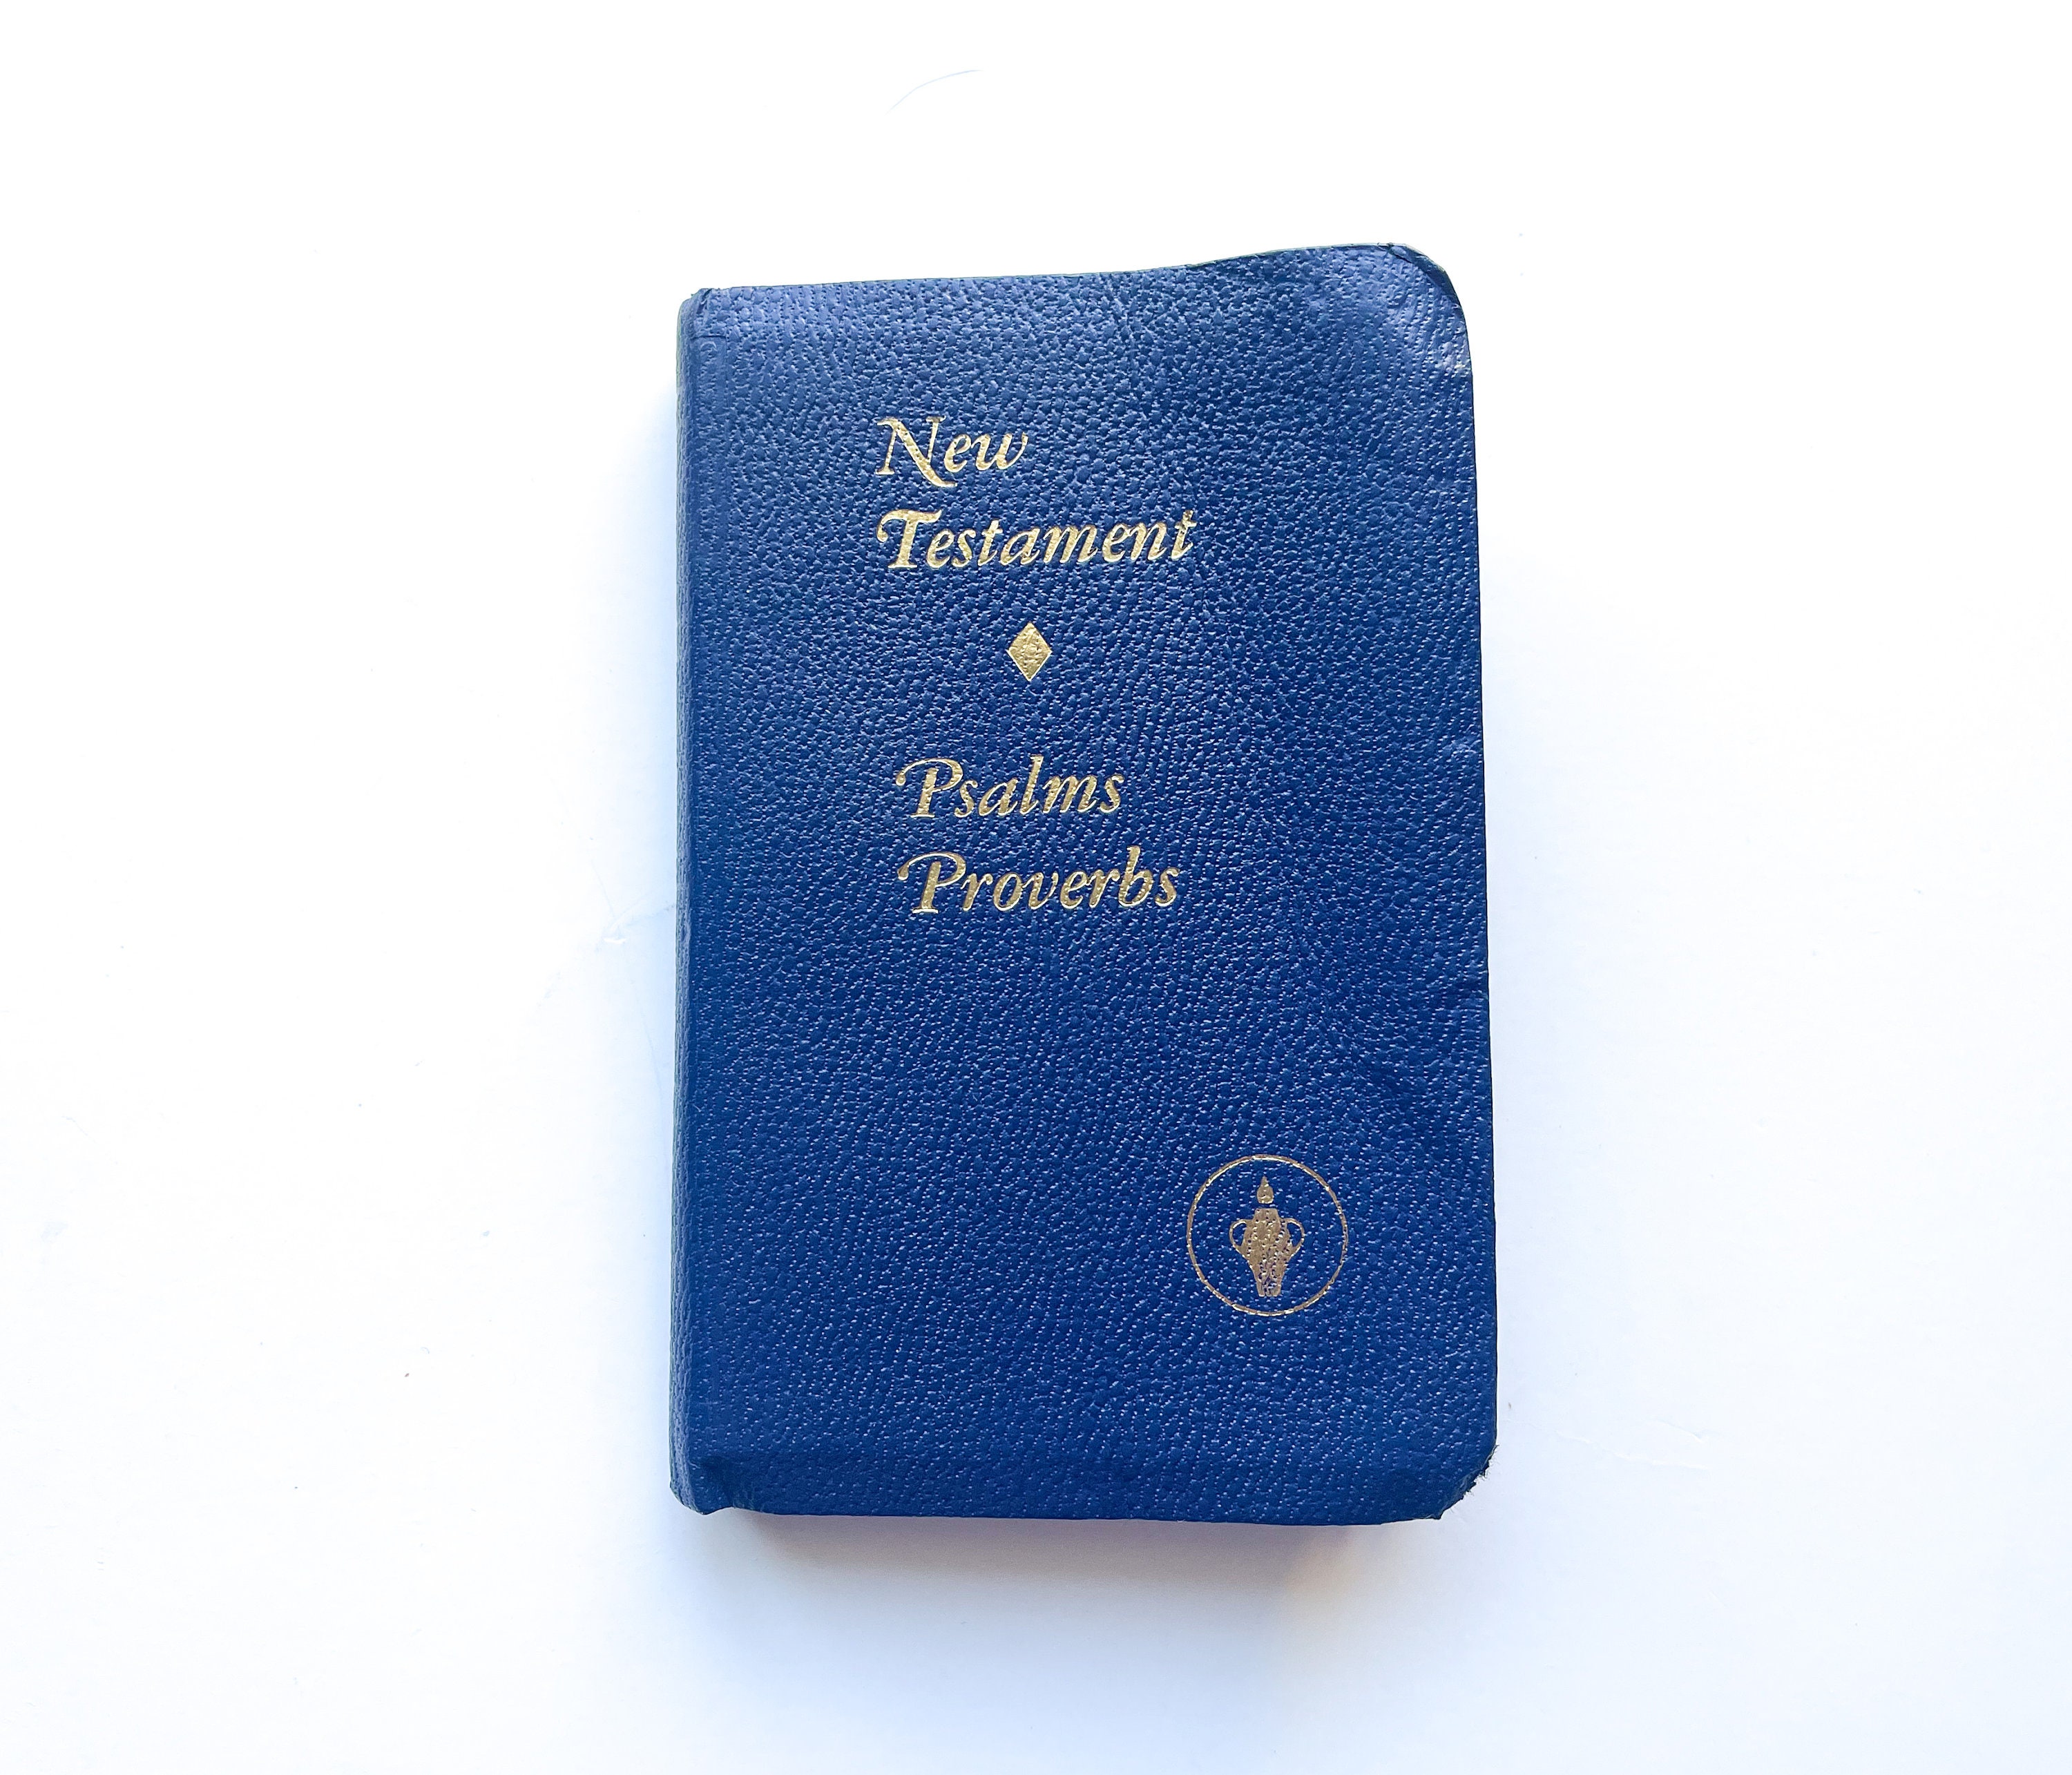 Vest Pocket New Testament & Psalms Proverbs Gideons 1985 Blue Tiny Book  Miniature Bible 